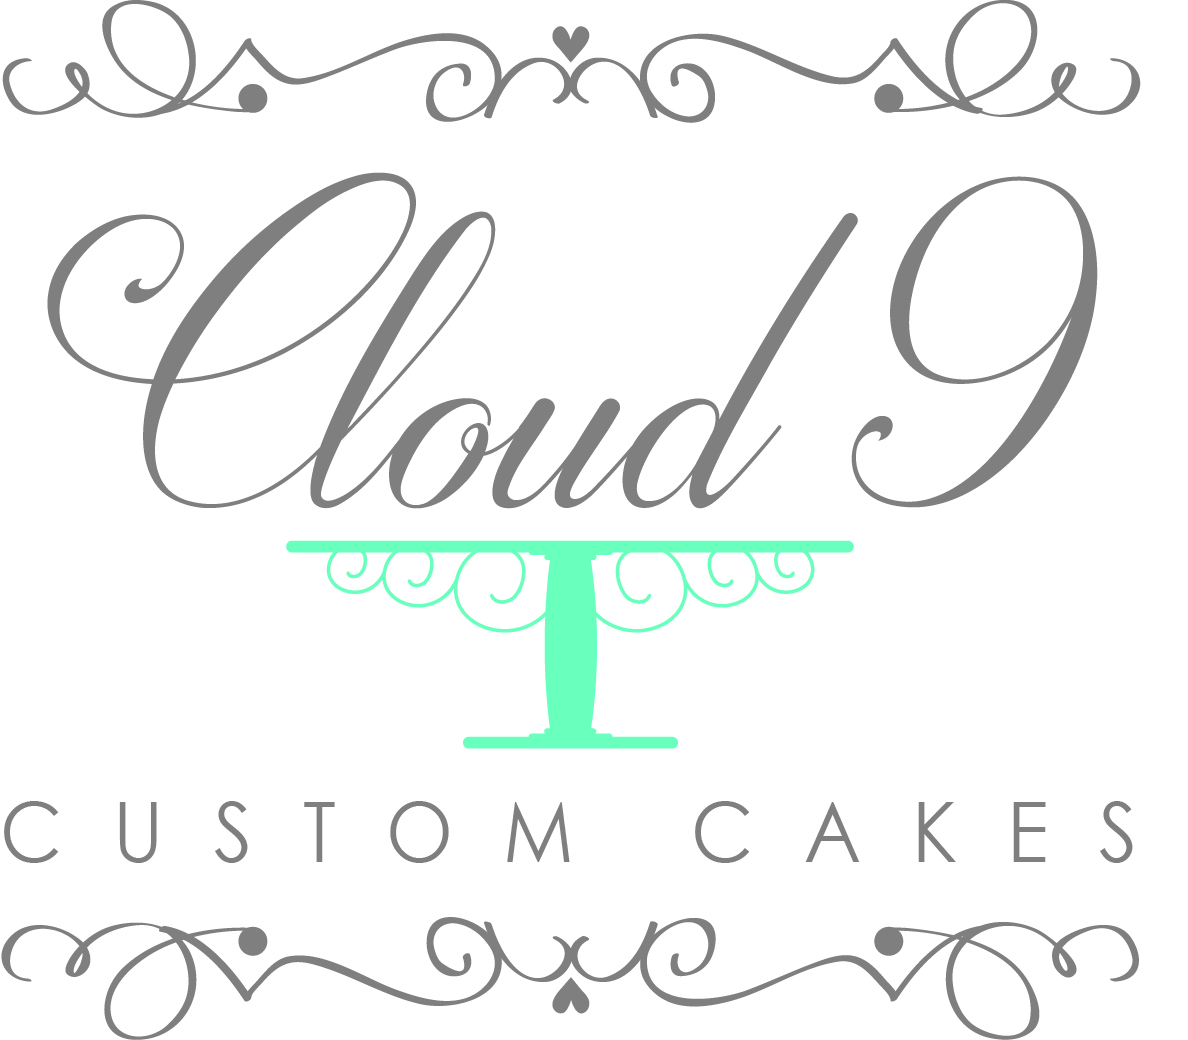 Cloud 9 Custom Cakes